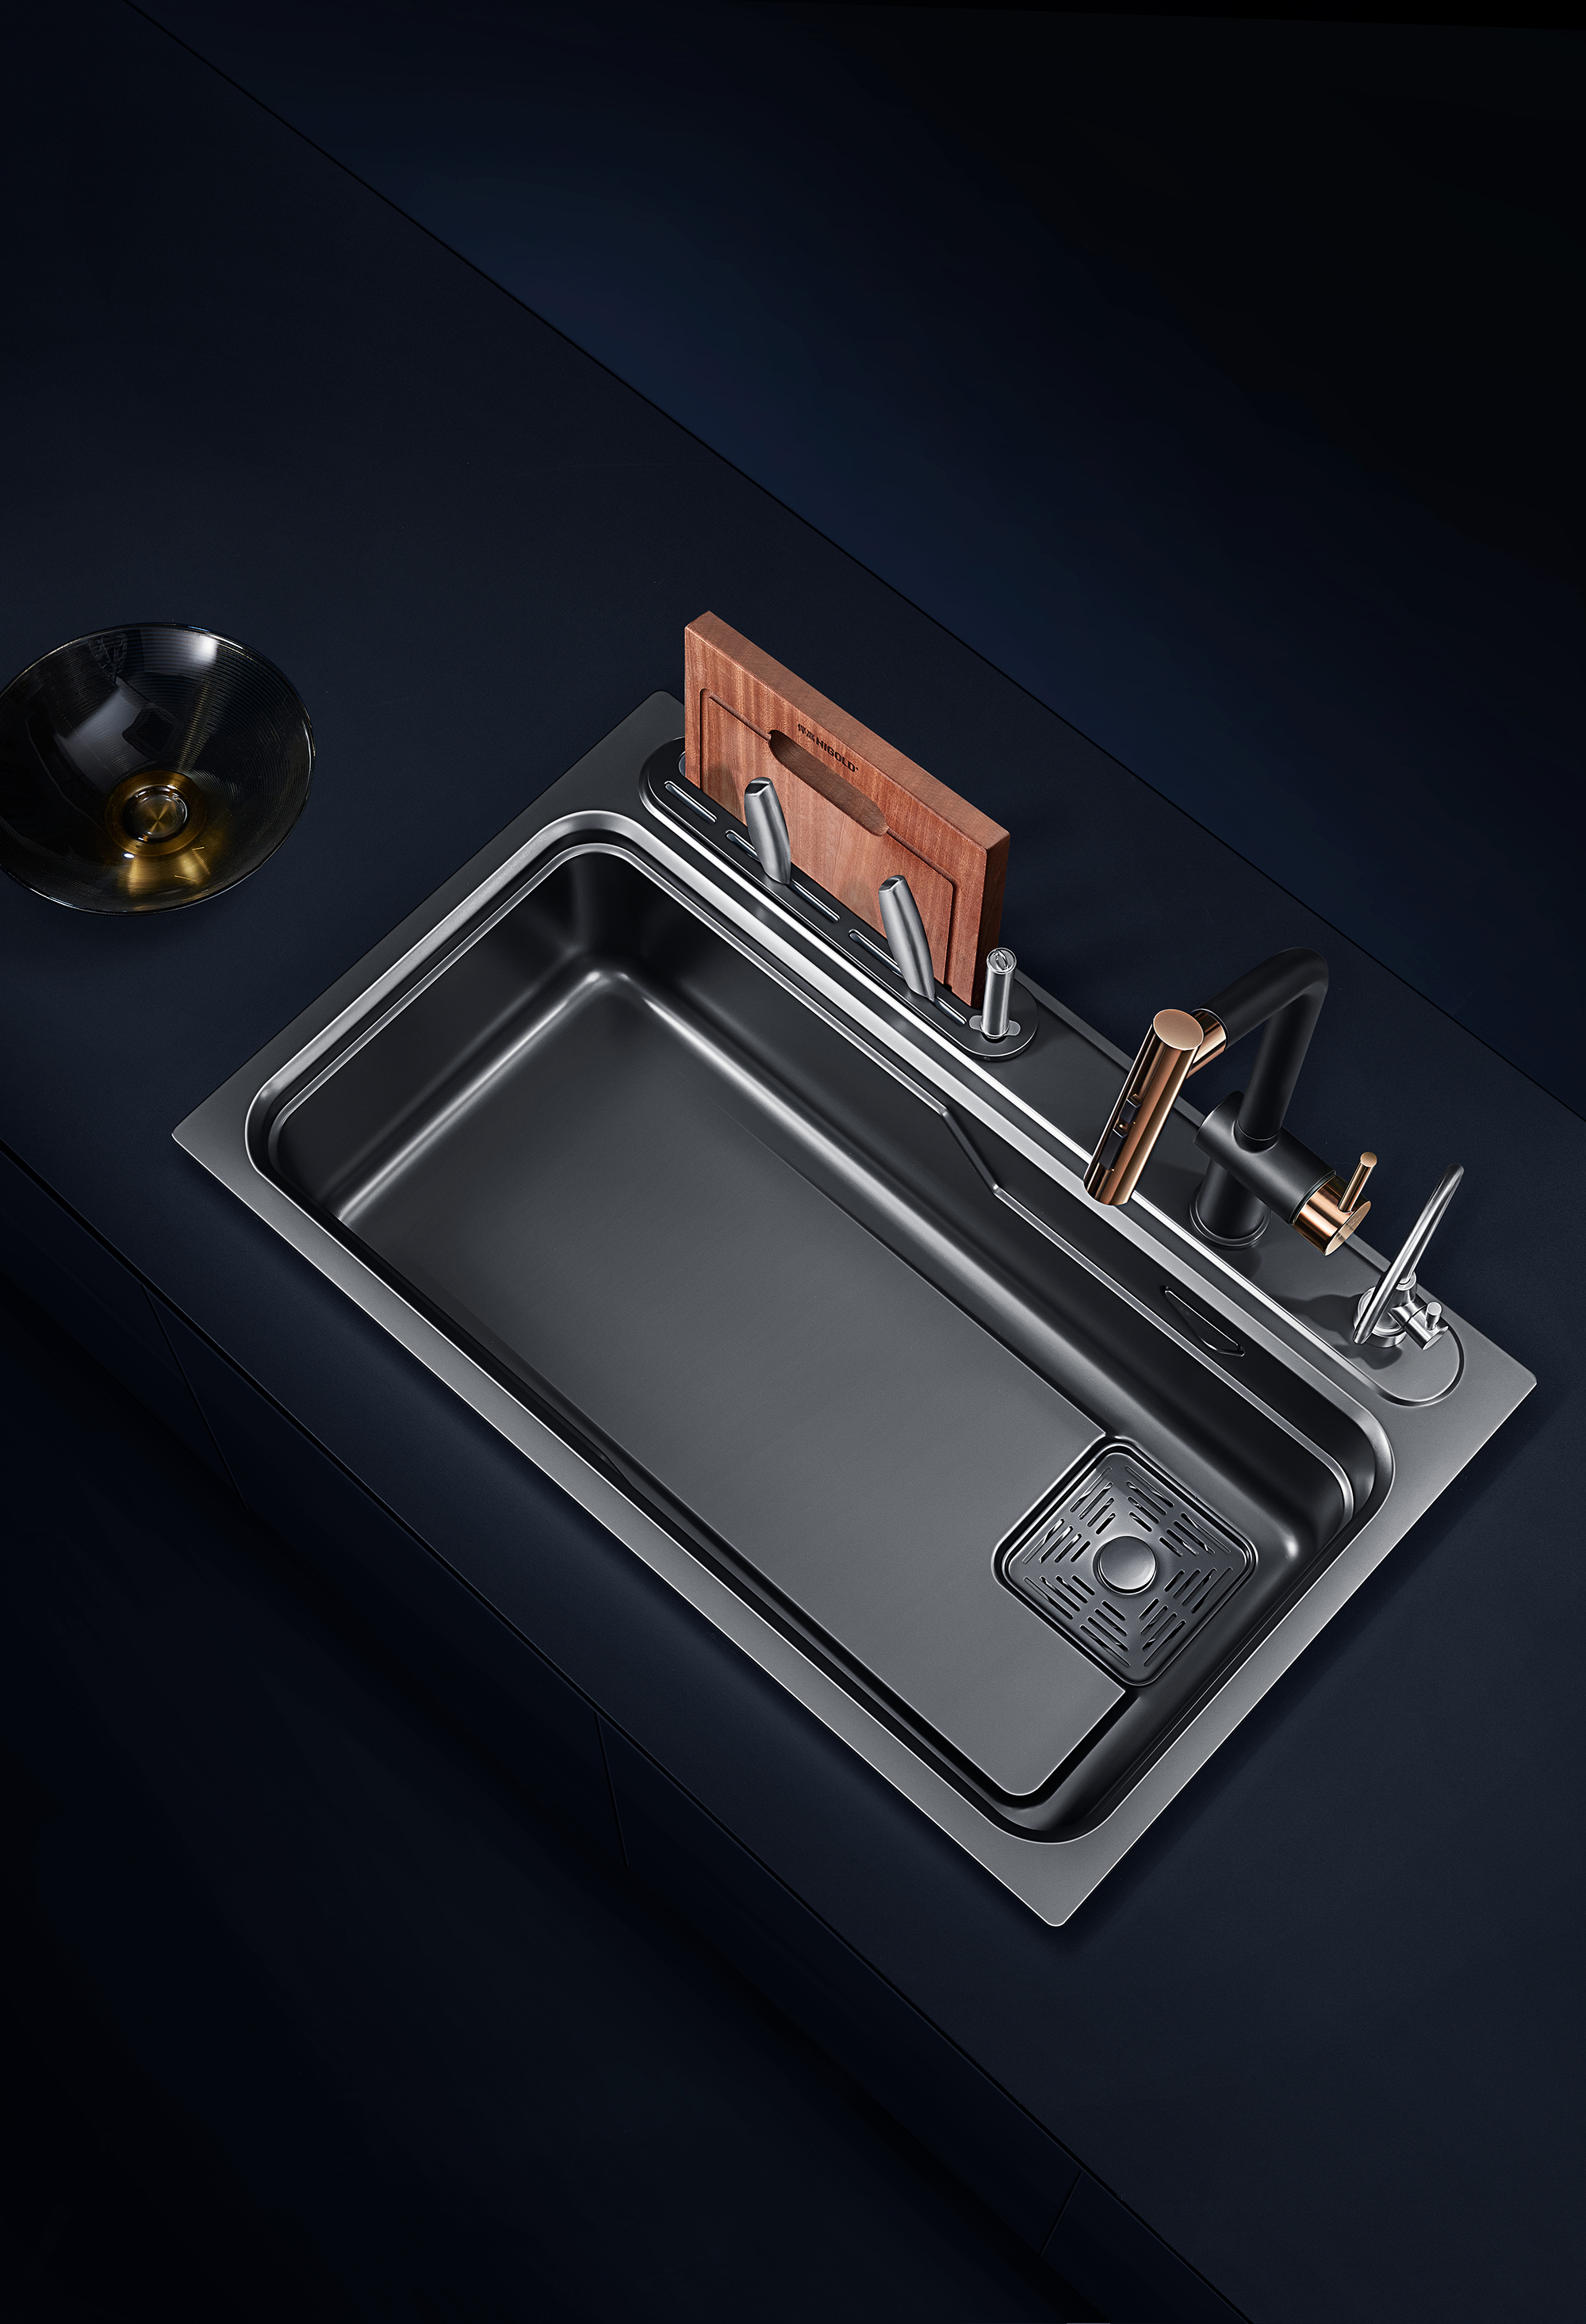 BL2.0 Multifunctional Sink